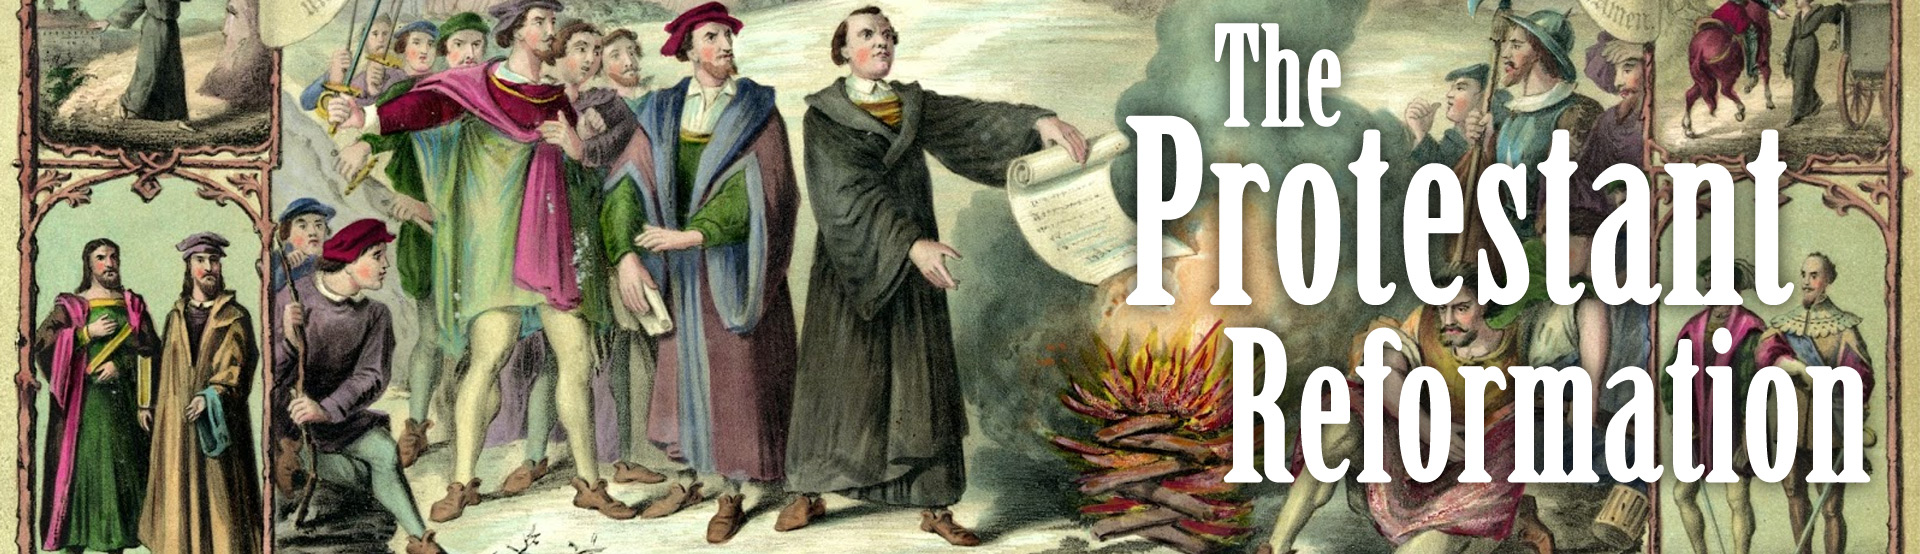 The Protestant Revolution